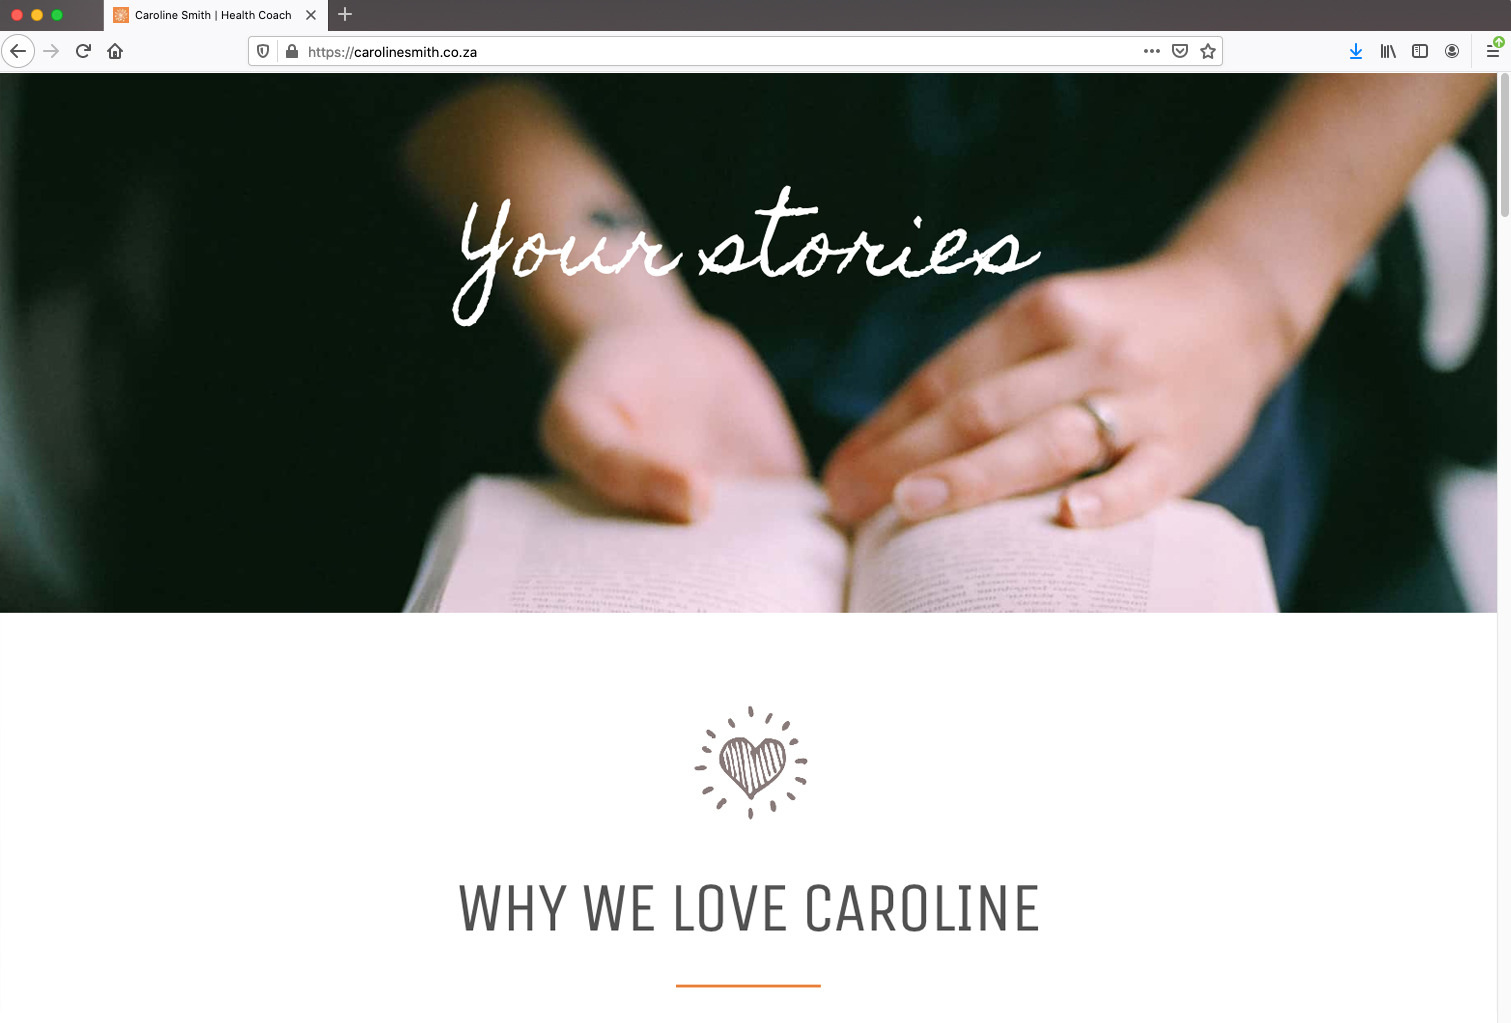 Caroline Smith Health Coach: typical website page